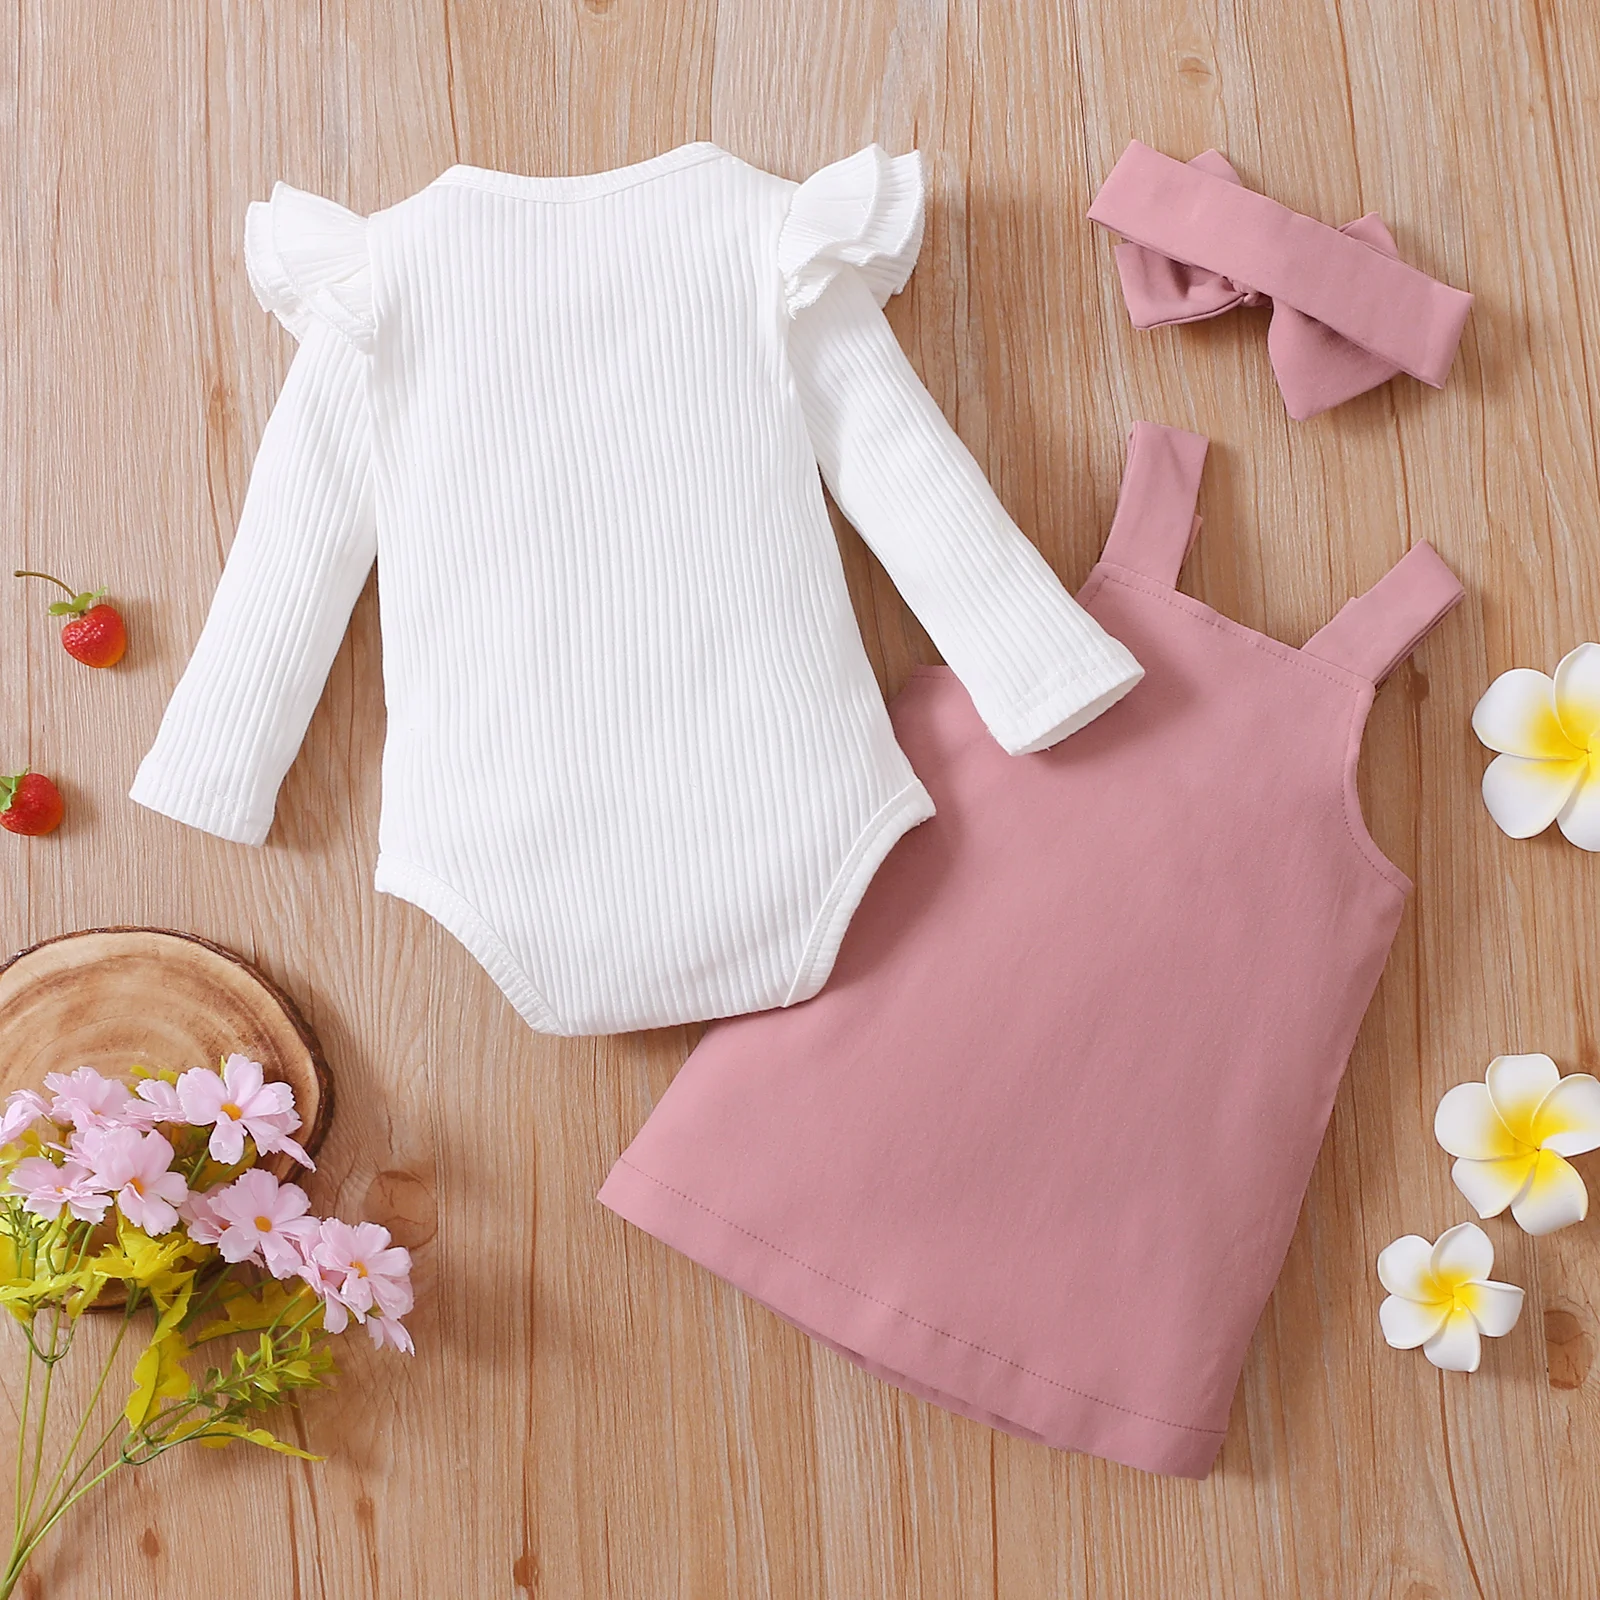 Autumn Newborn Baby Clothes Set 